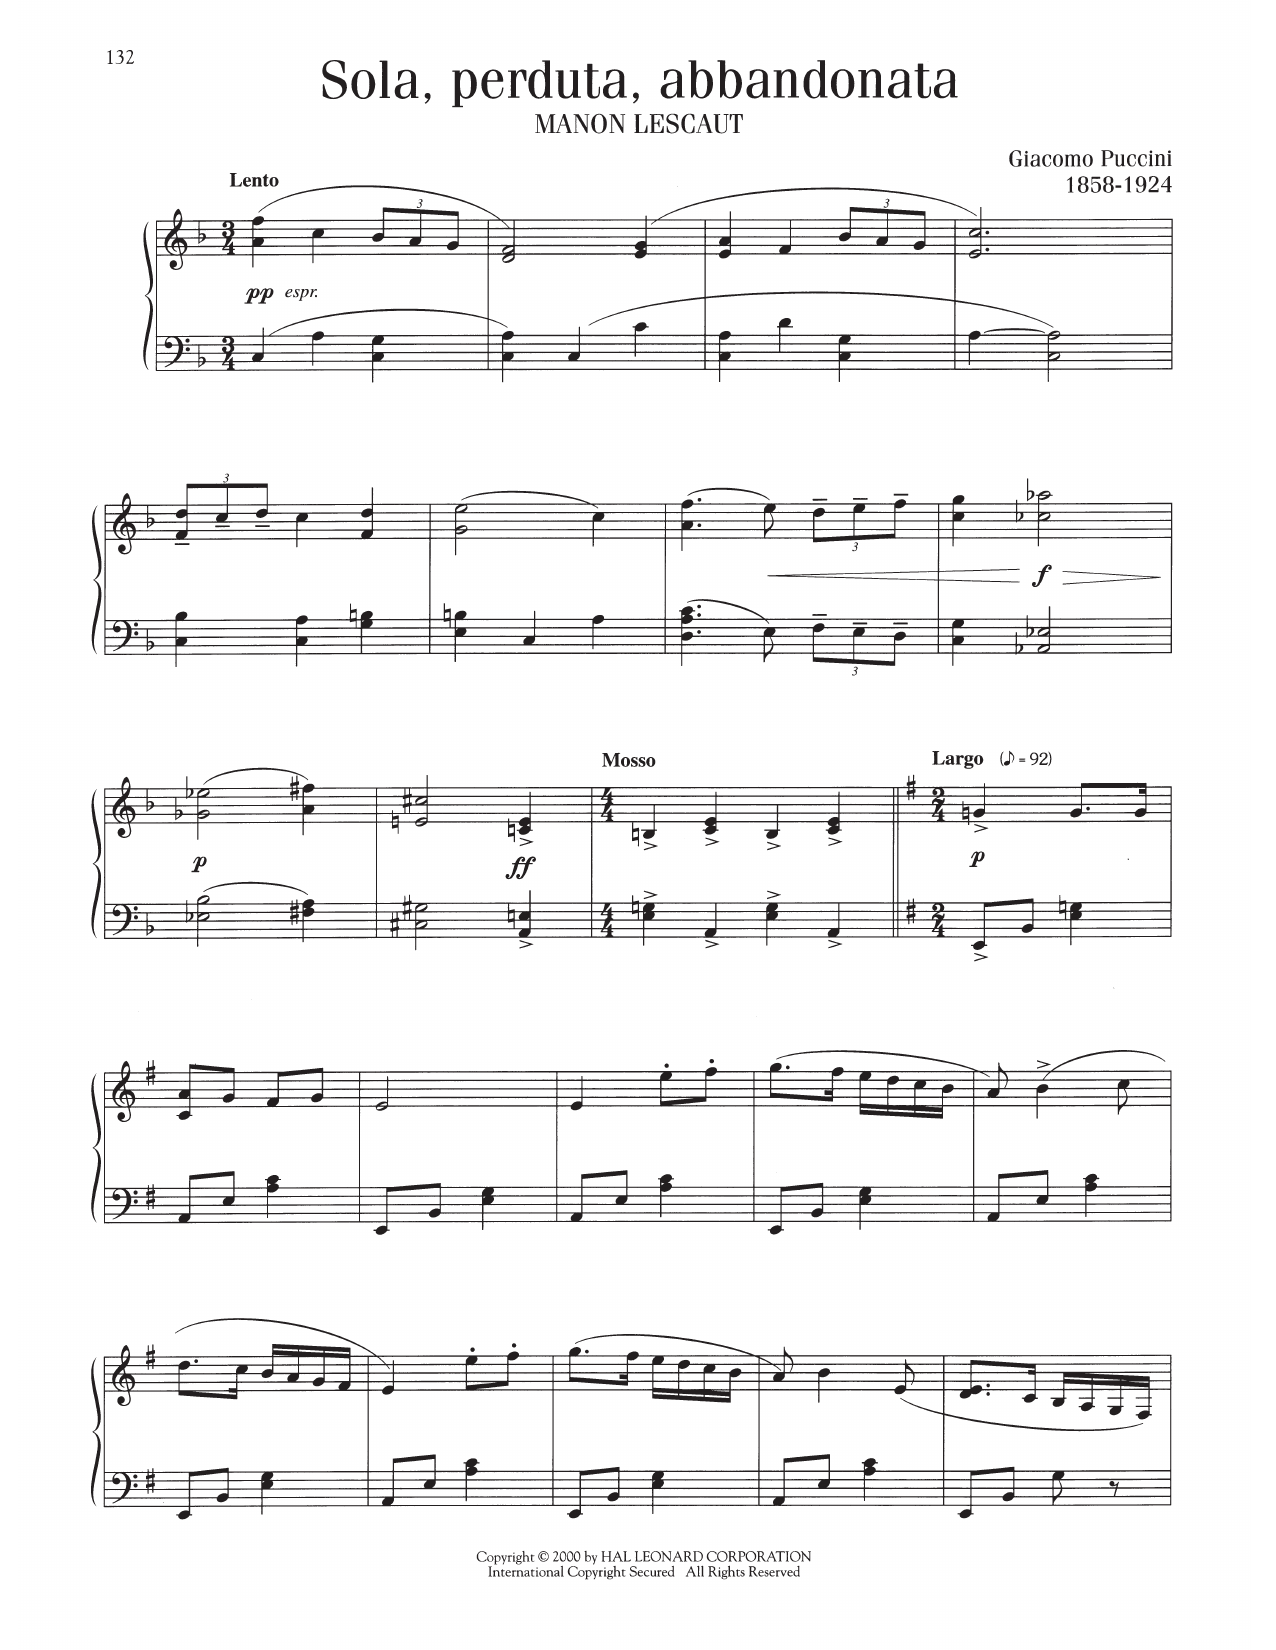 Giacomo Puccini Sola, Perduta, Abbandonata Sheet Music Notes & Chords for Piano Solo - Download or Print PDF